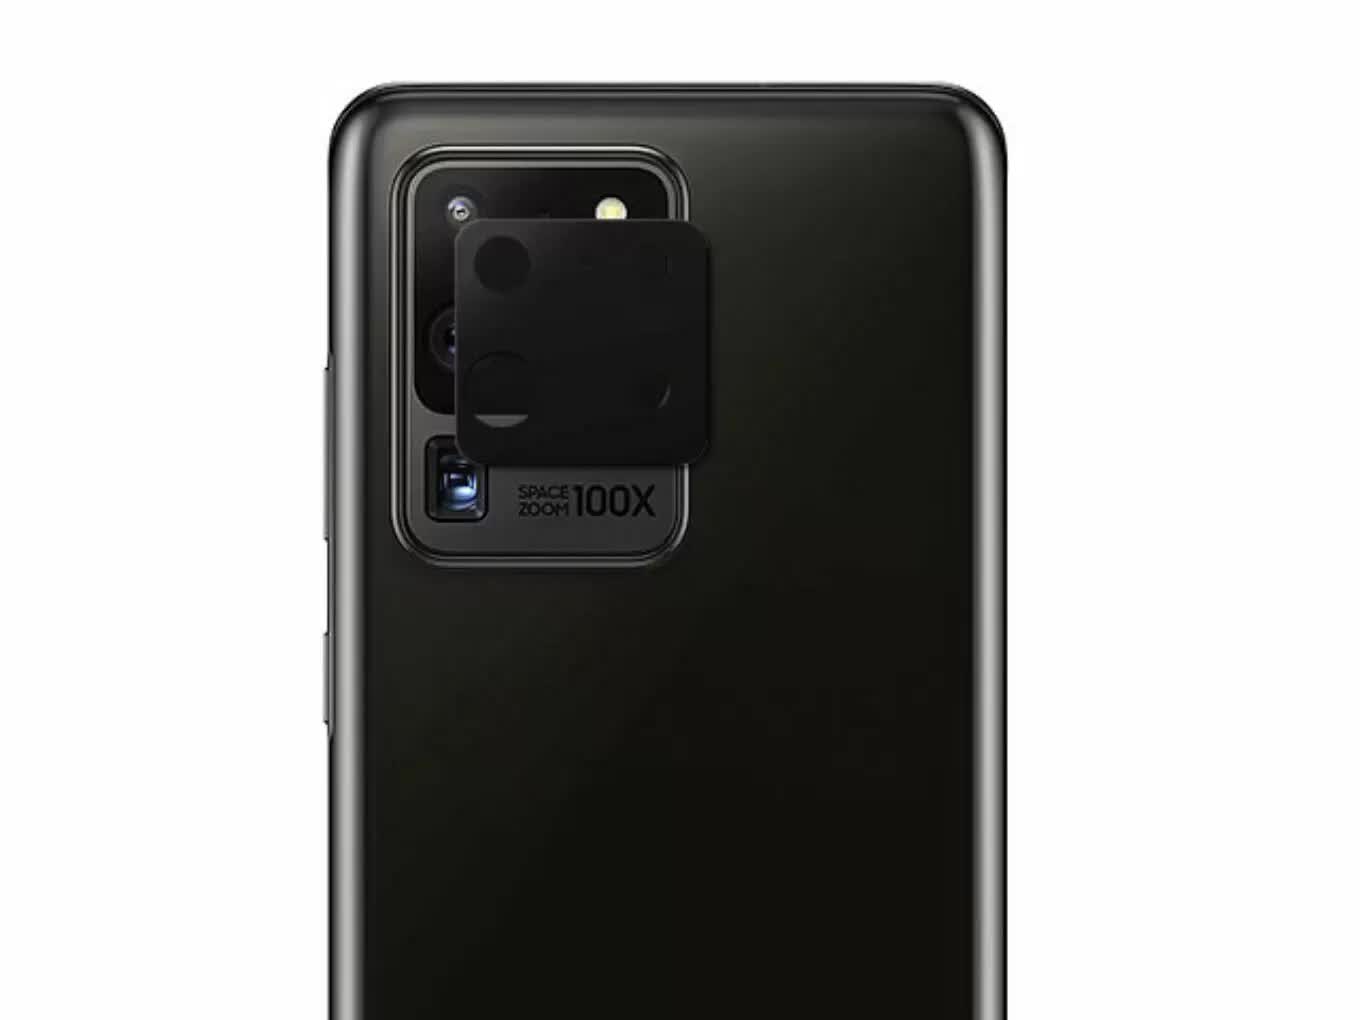 Защитный экран на камеру Barn&Hollis для Samsung Galaxy S20 Ultra Black УТ000022675